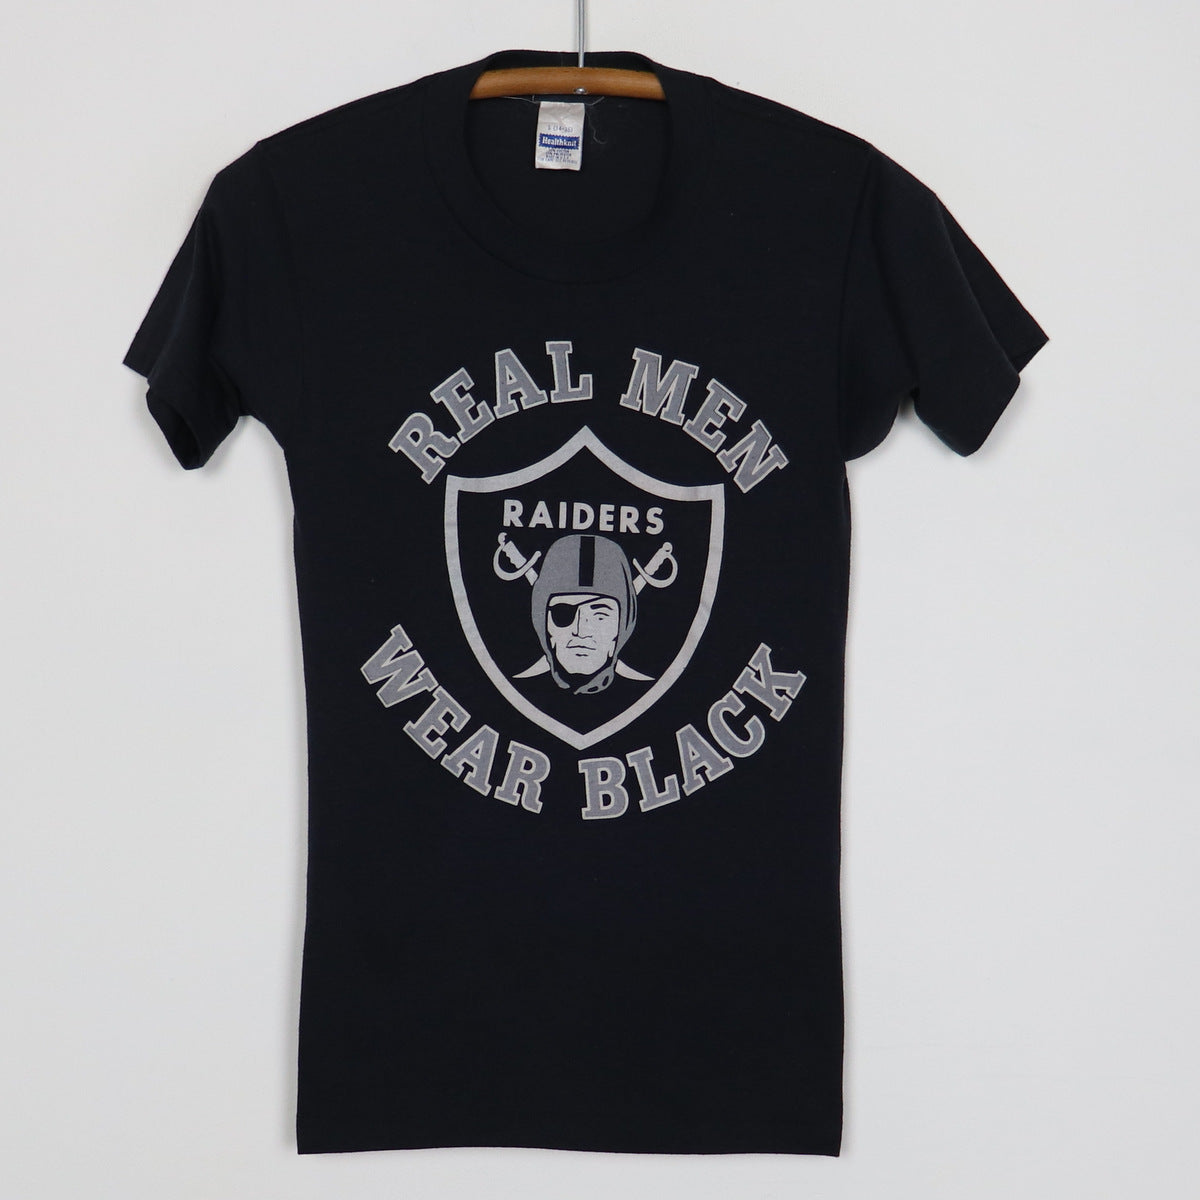 Wyco Vintage 1980s Los Angeles Raiders Shirt